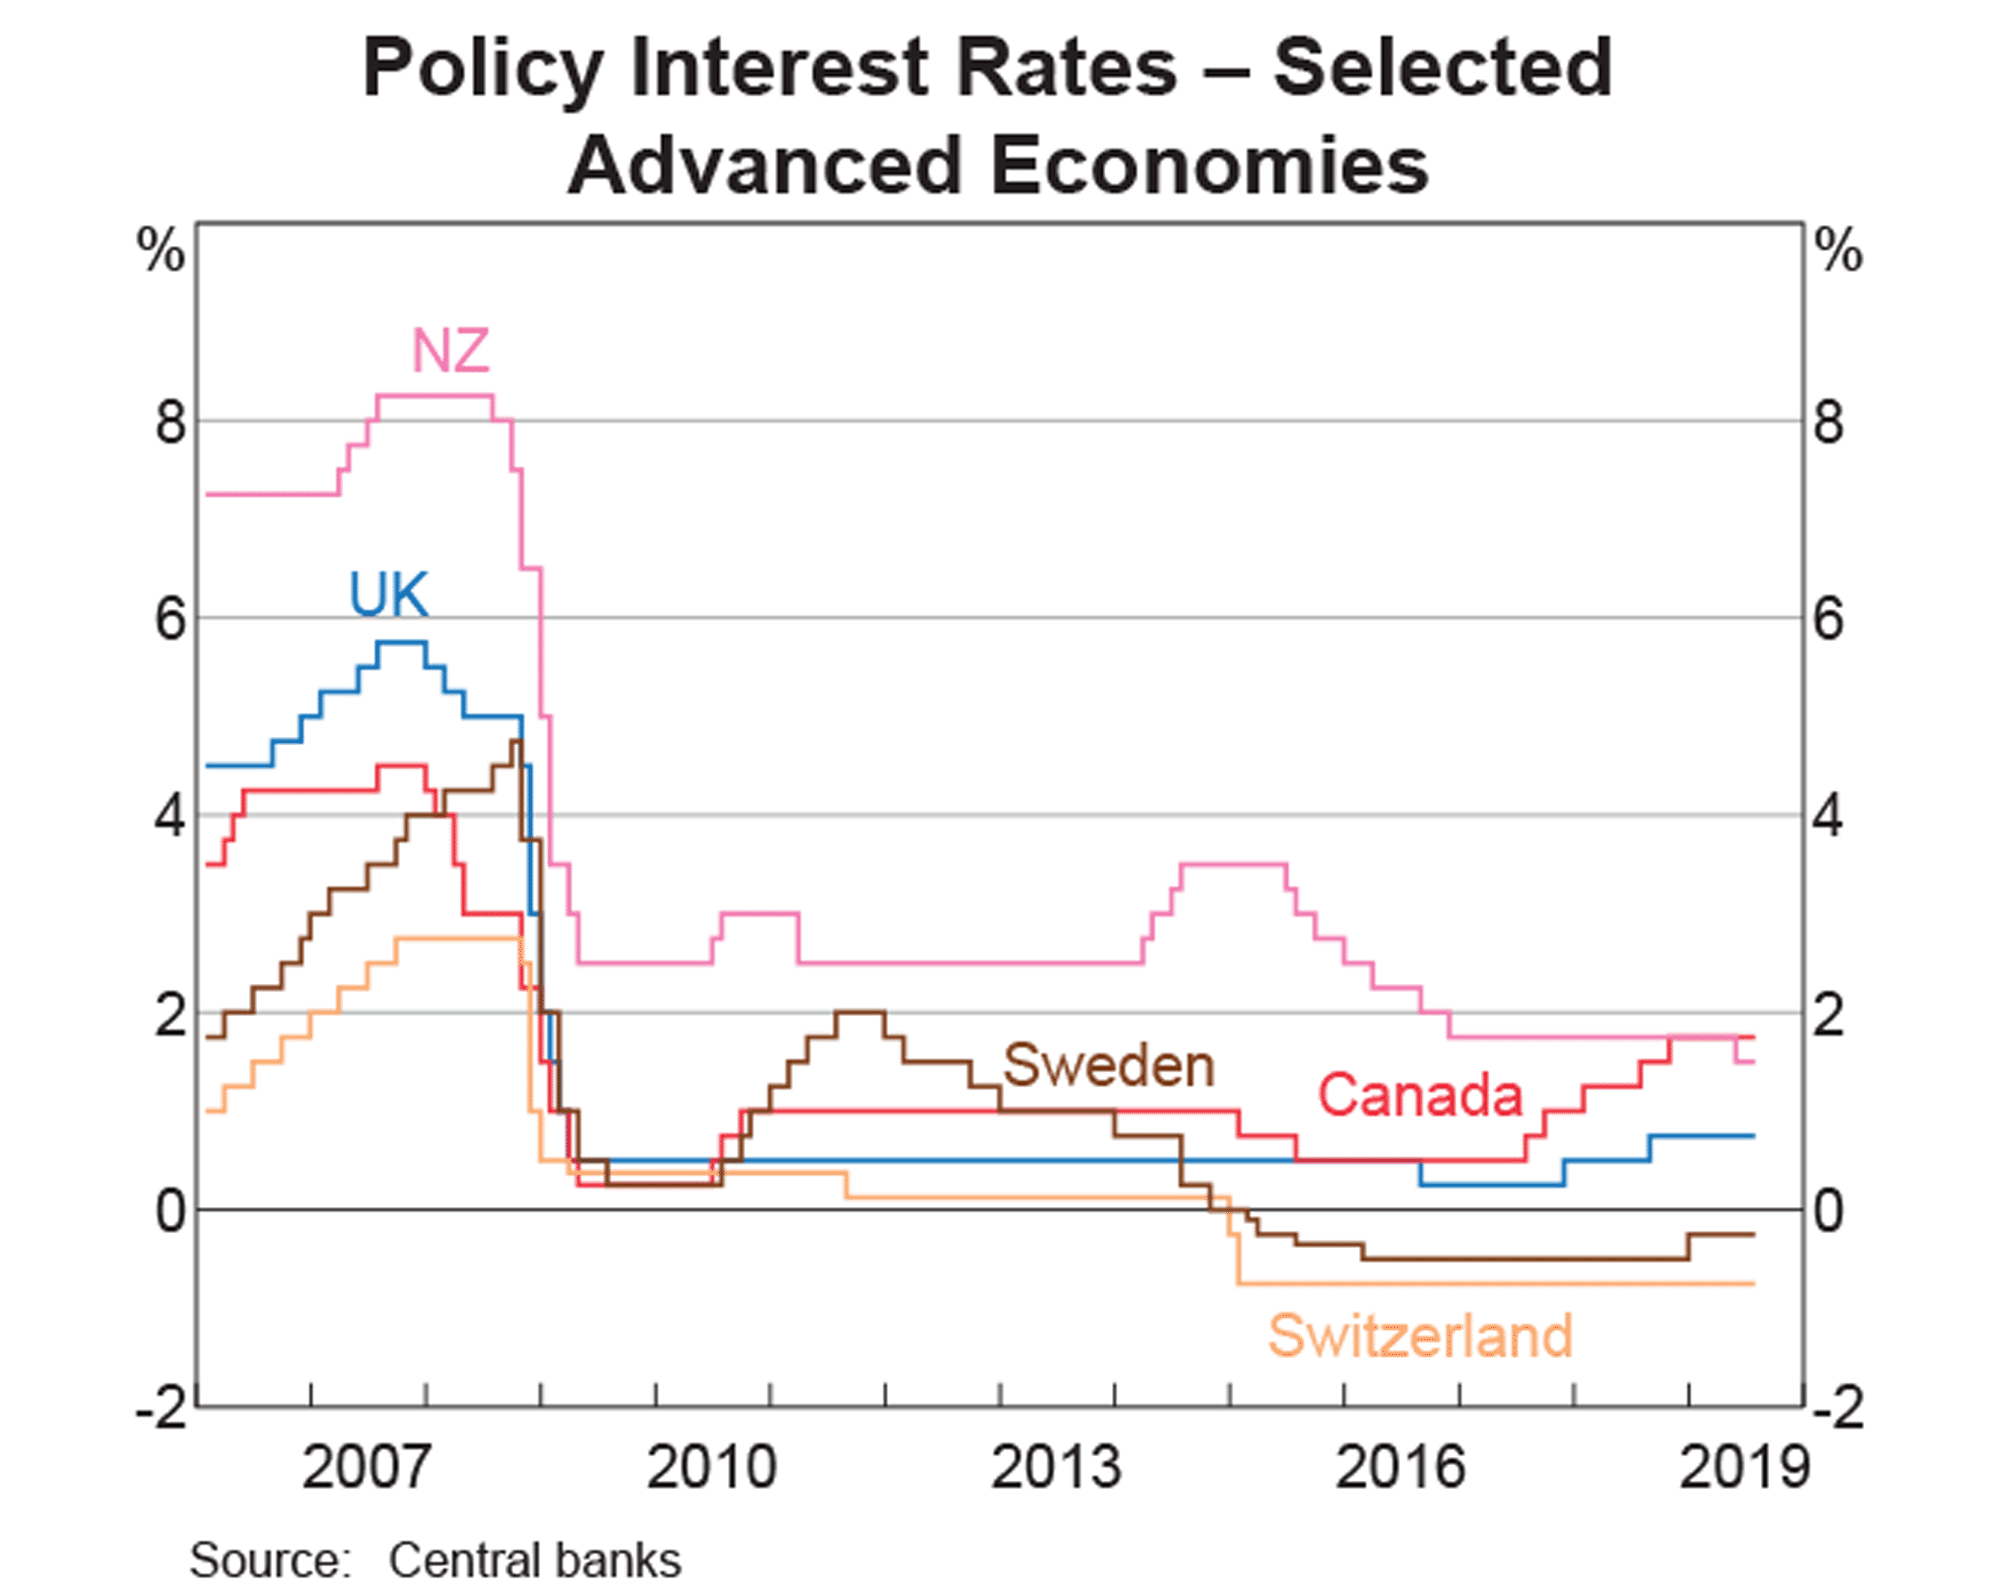 Major advanced economies already have negative interest rates